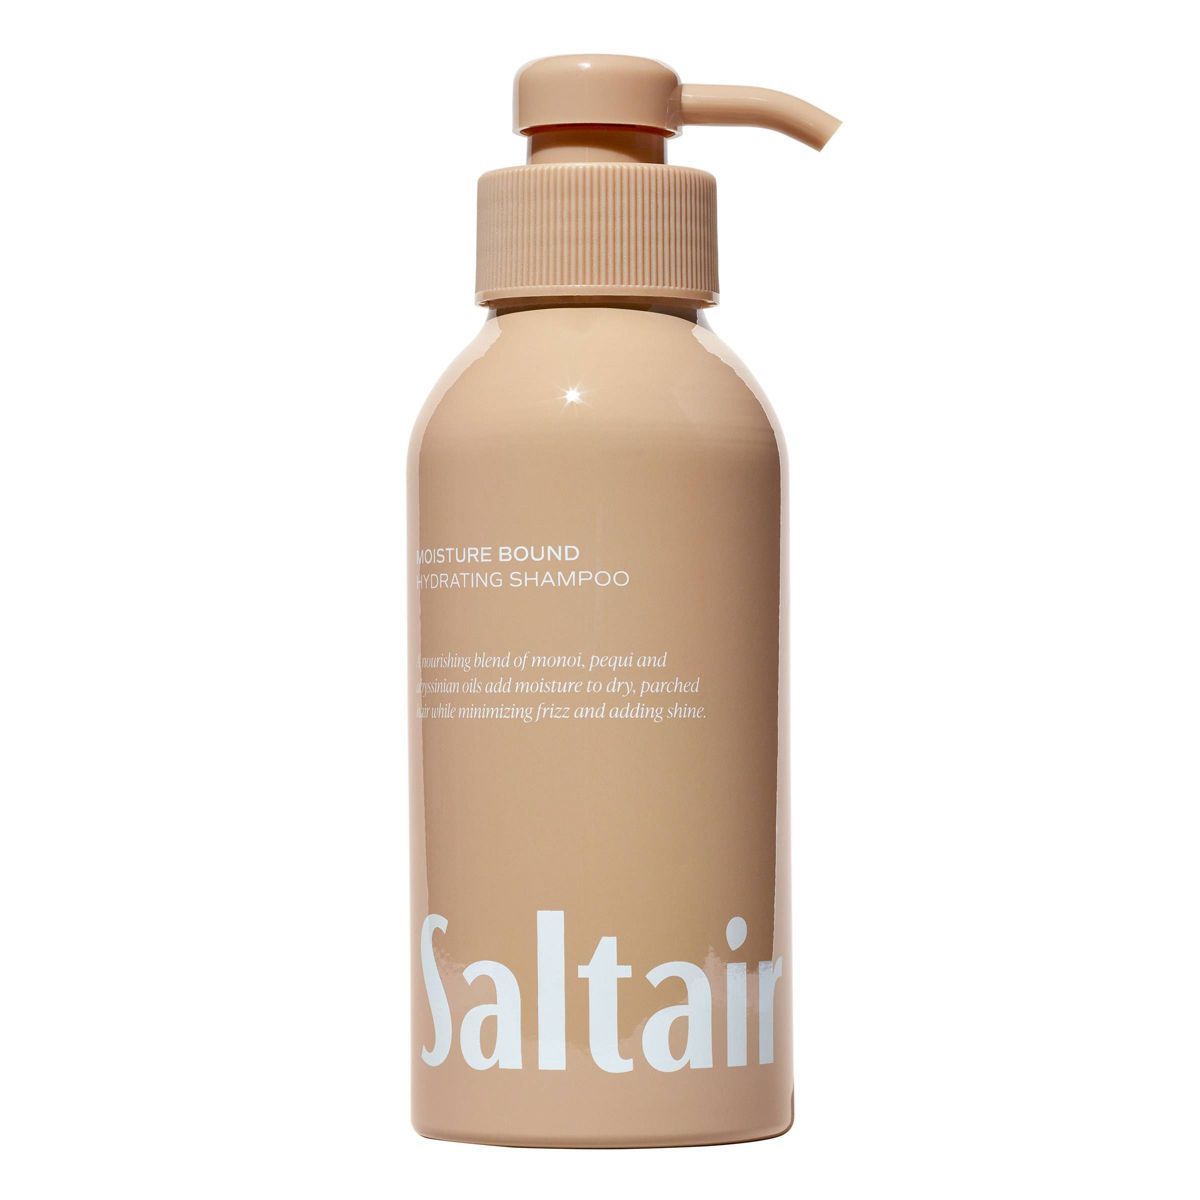 Saltair Moisture Bound Hydrating Shampoo - 14 fl oz | Target